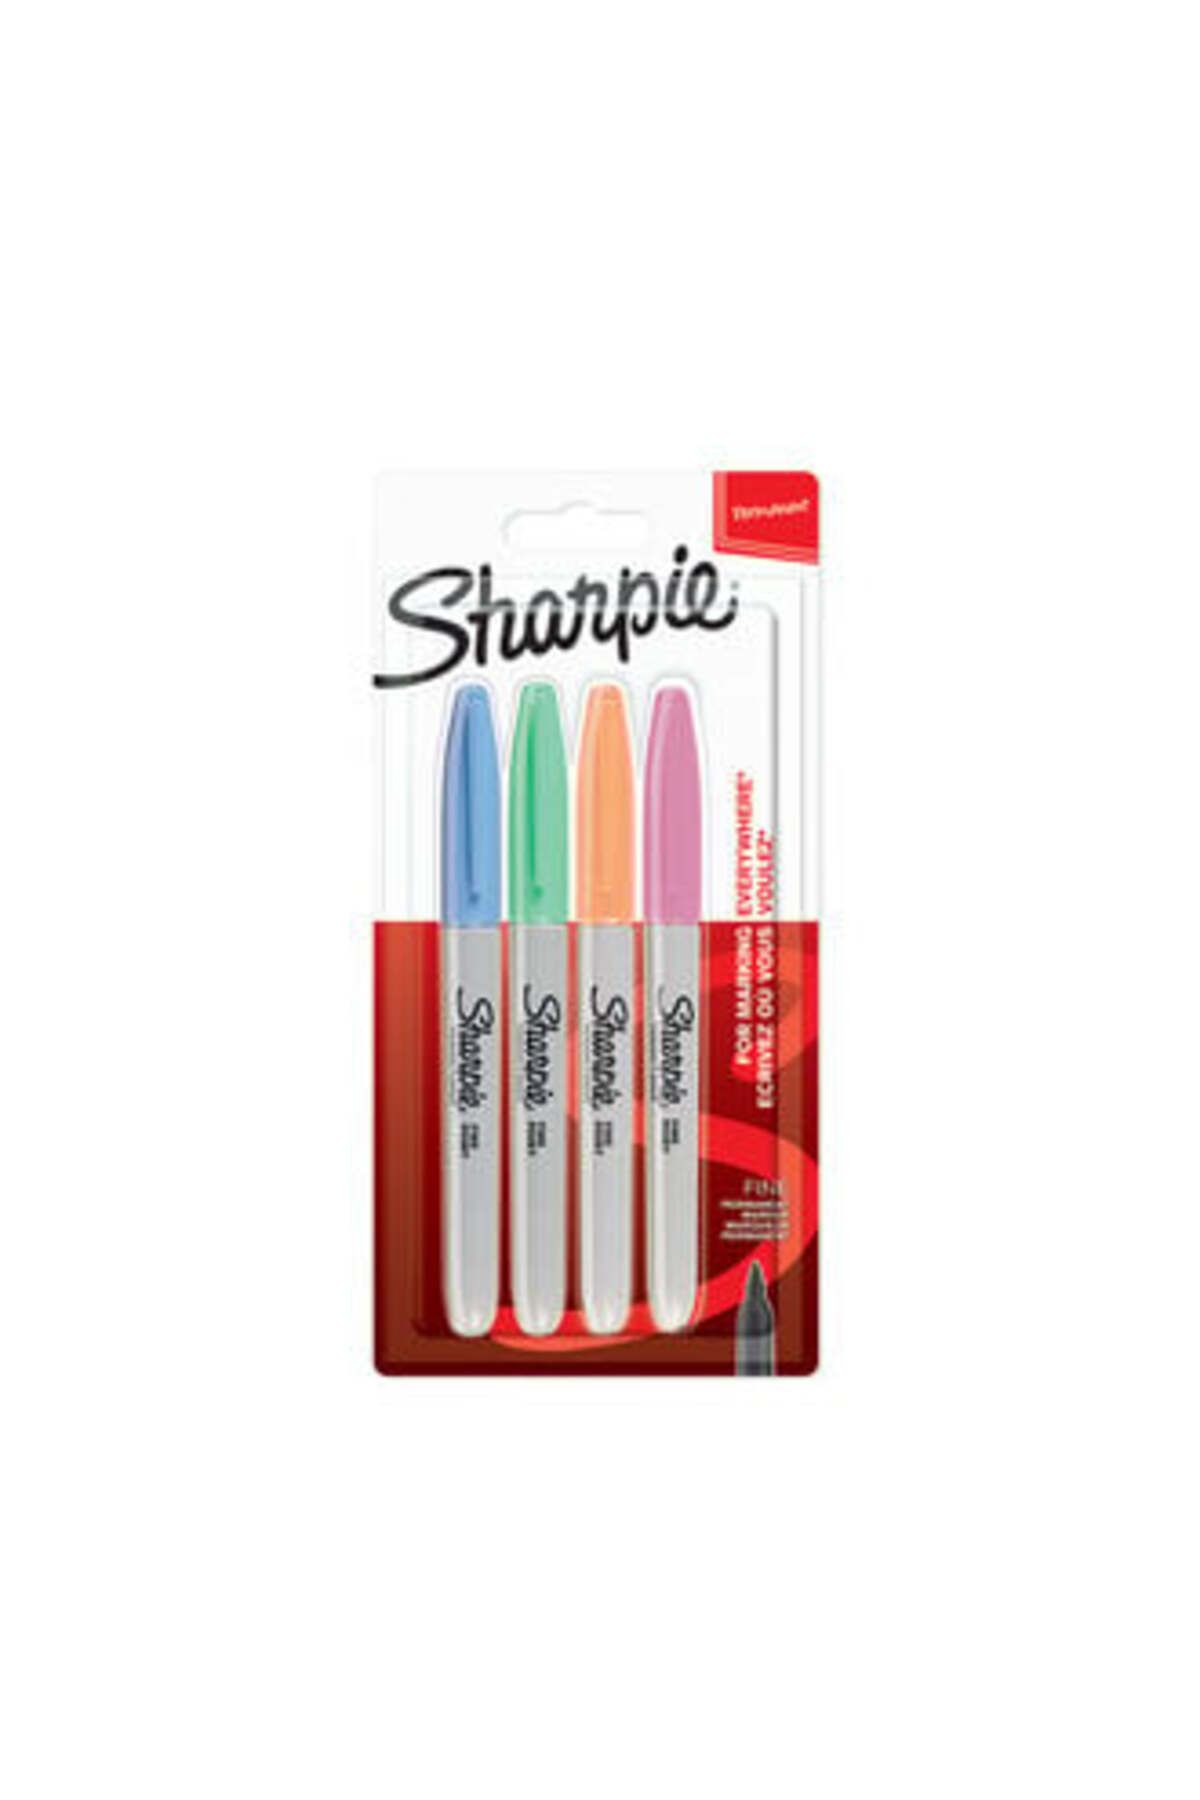 Sharpie Fine Permanent Keçeli kalem, 4'lü Pastel Renkli Boya Kalemi Seti ( 1 ADET )